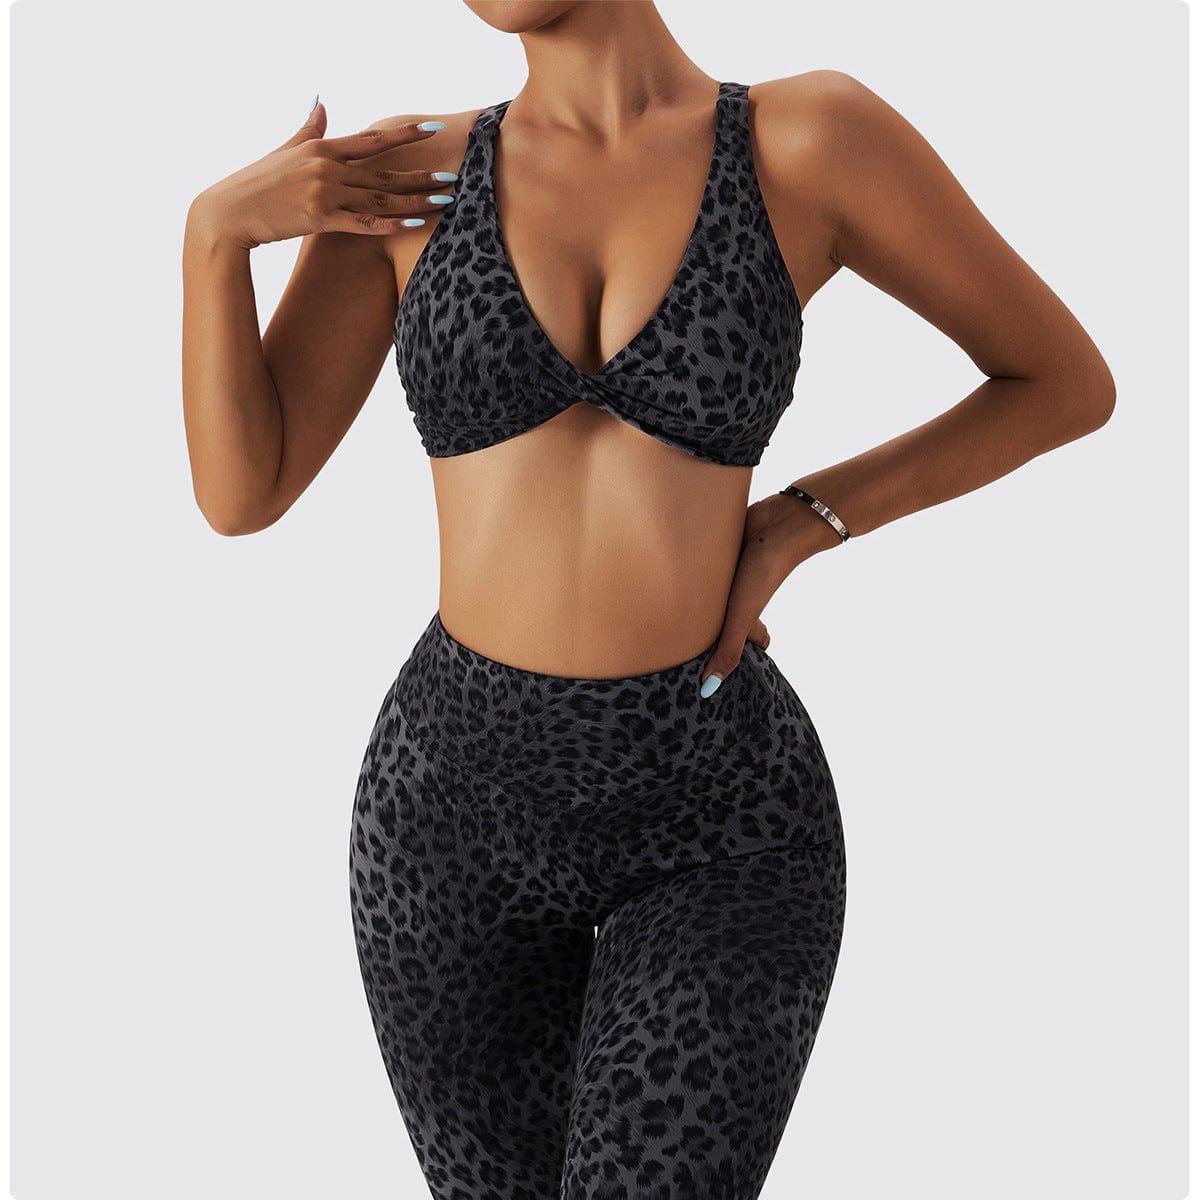 Buy Electric Yoga women padded unlined foil cheetah printed sport bra blush  Online